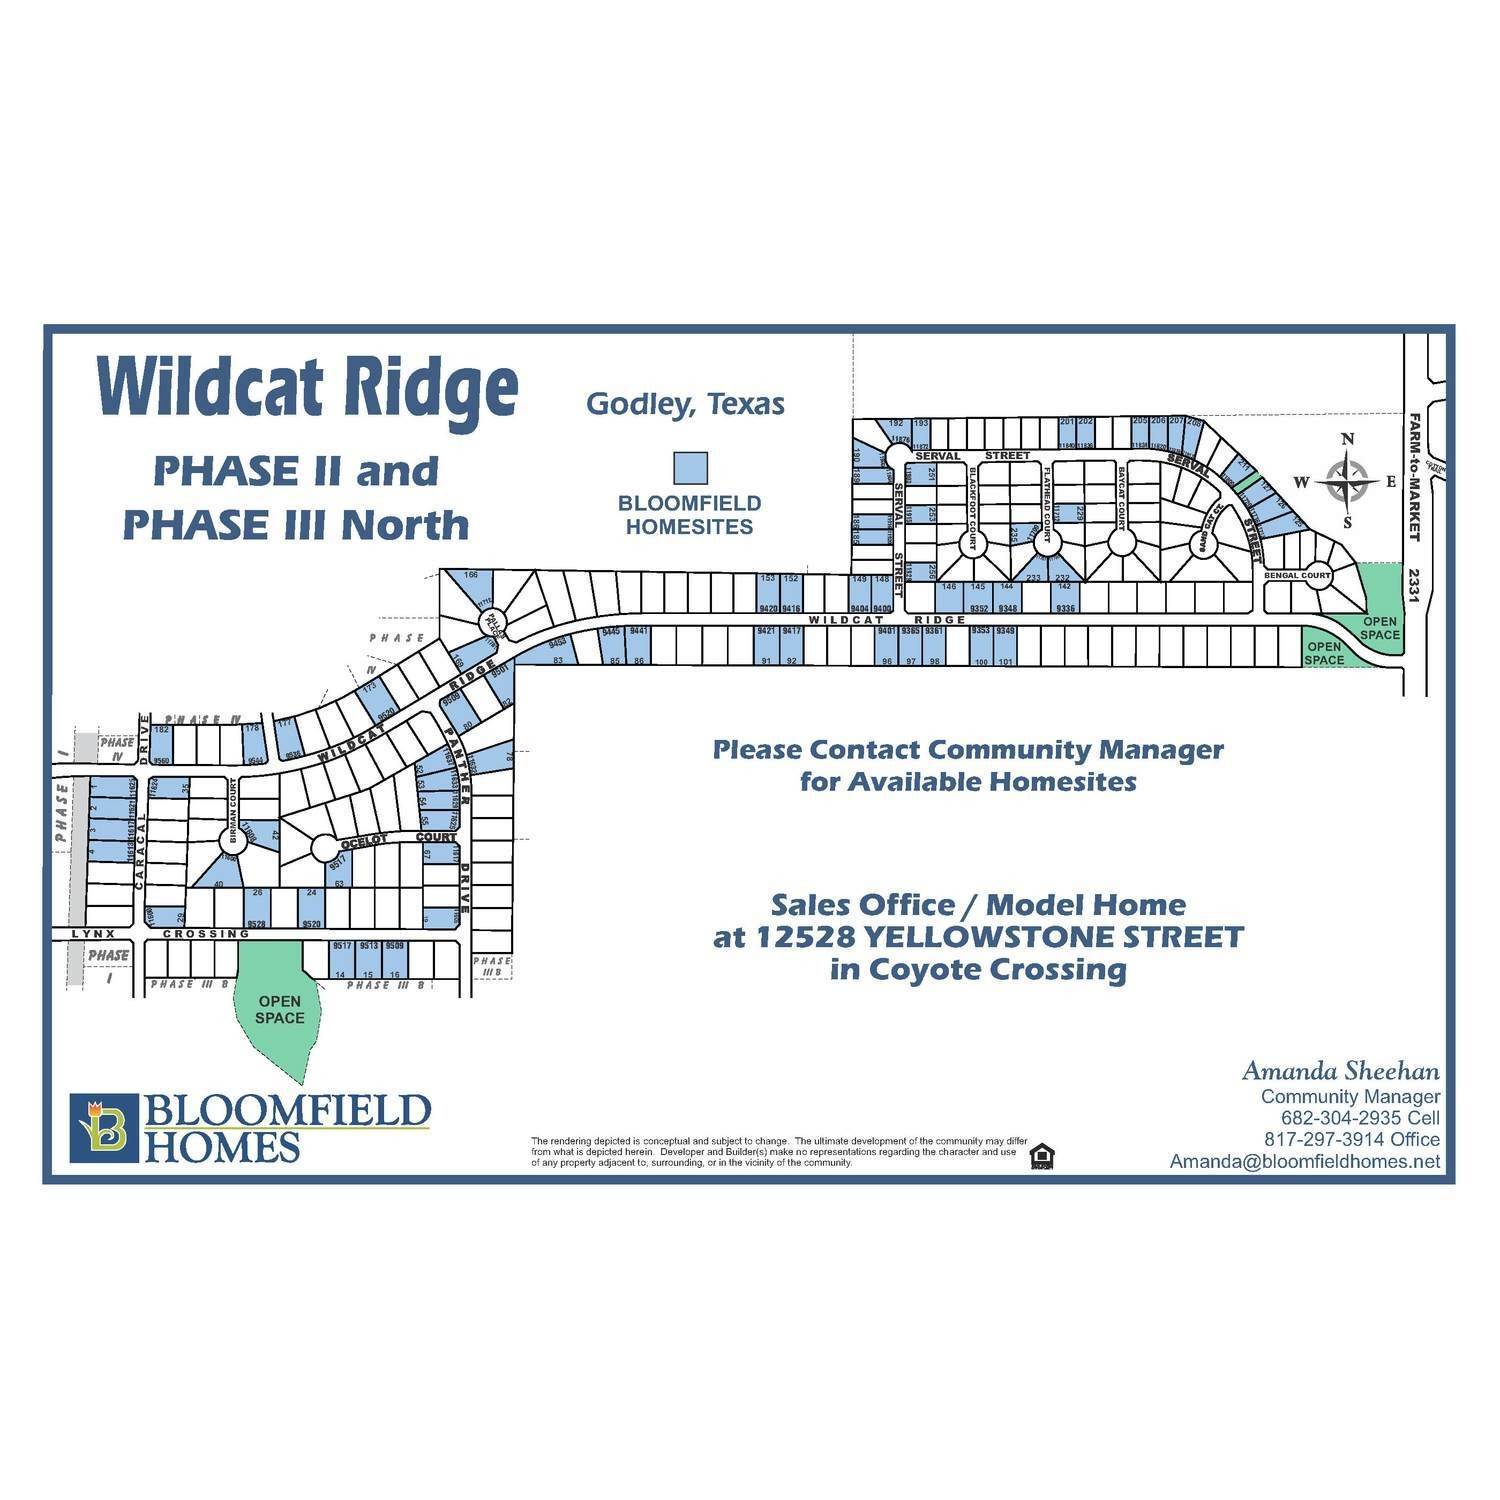 Wildcat Ridge building at 12528 Yellowstone Street, Godley, TX 76044